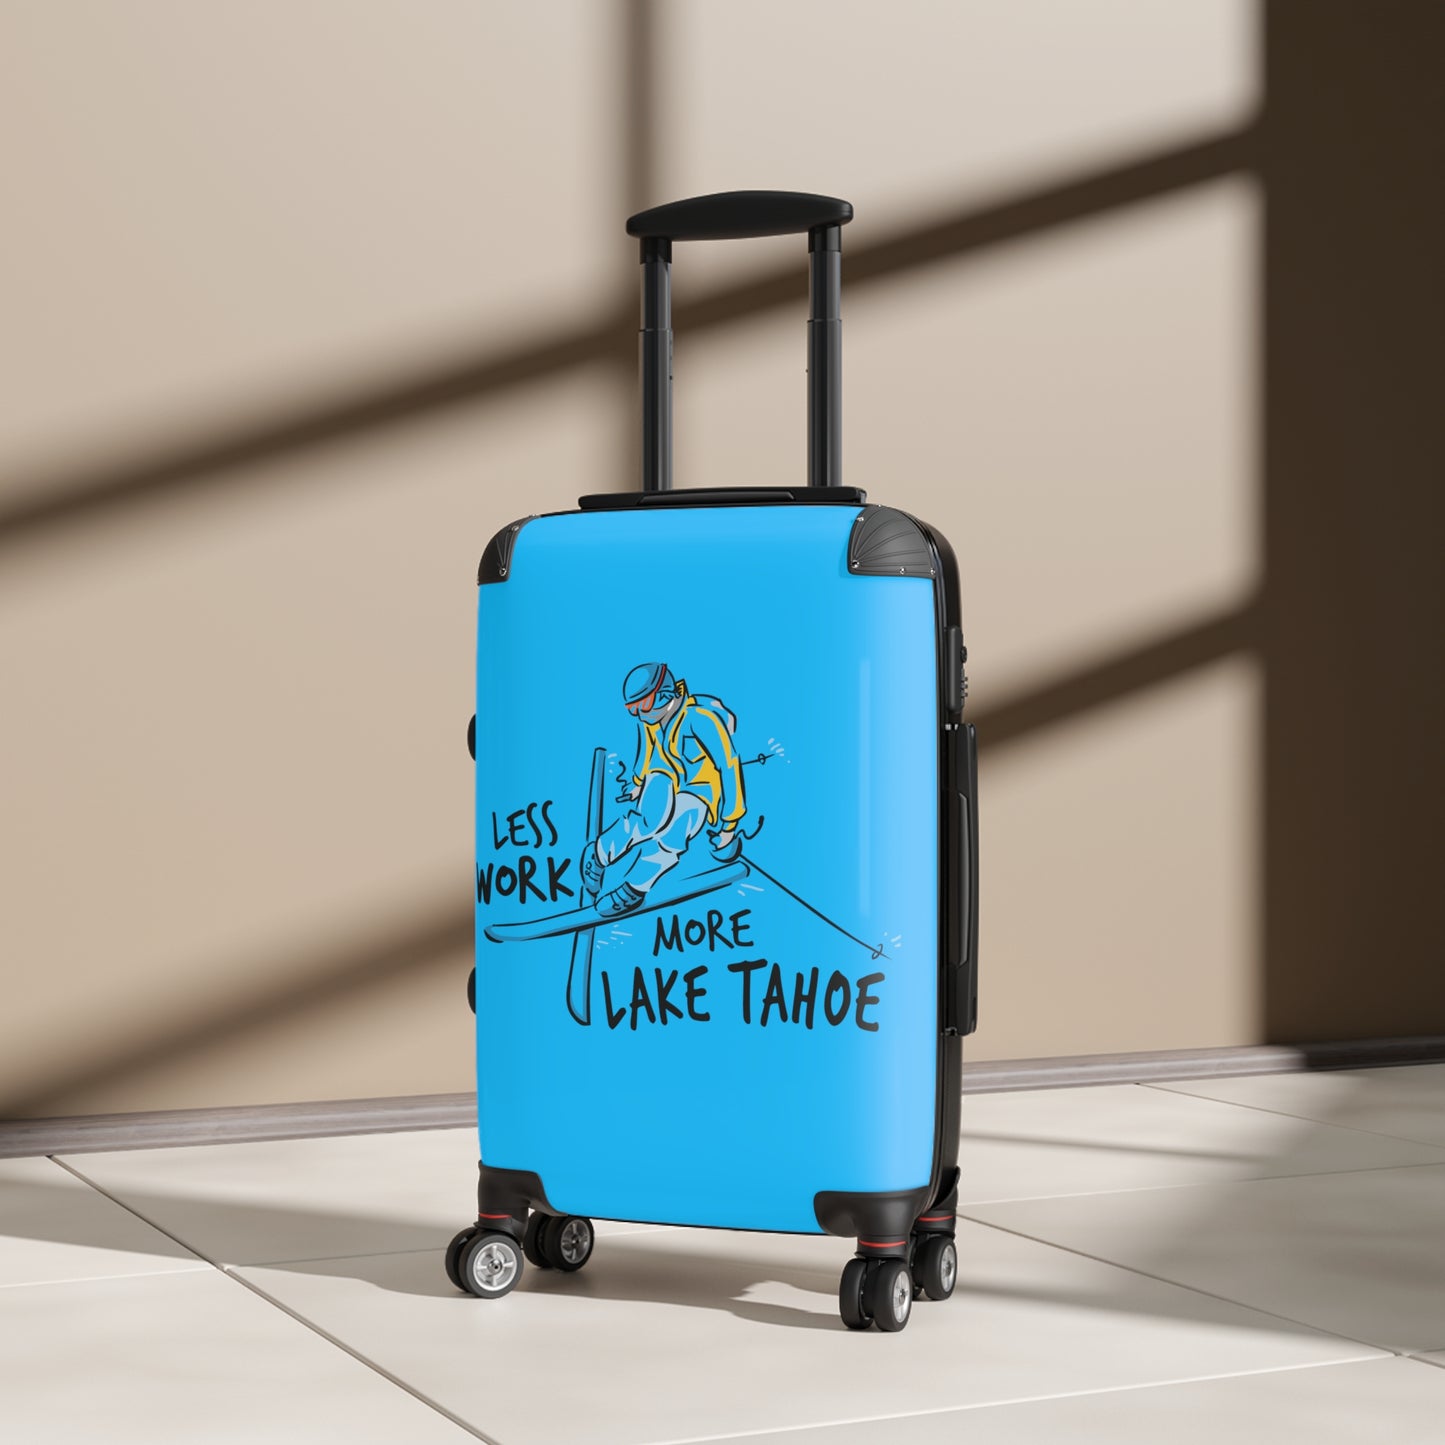 Less Work More Lake Tahoe Custom Luggage